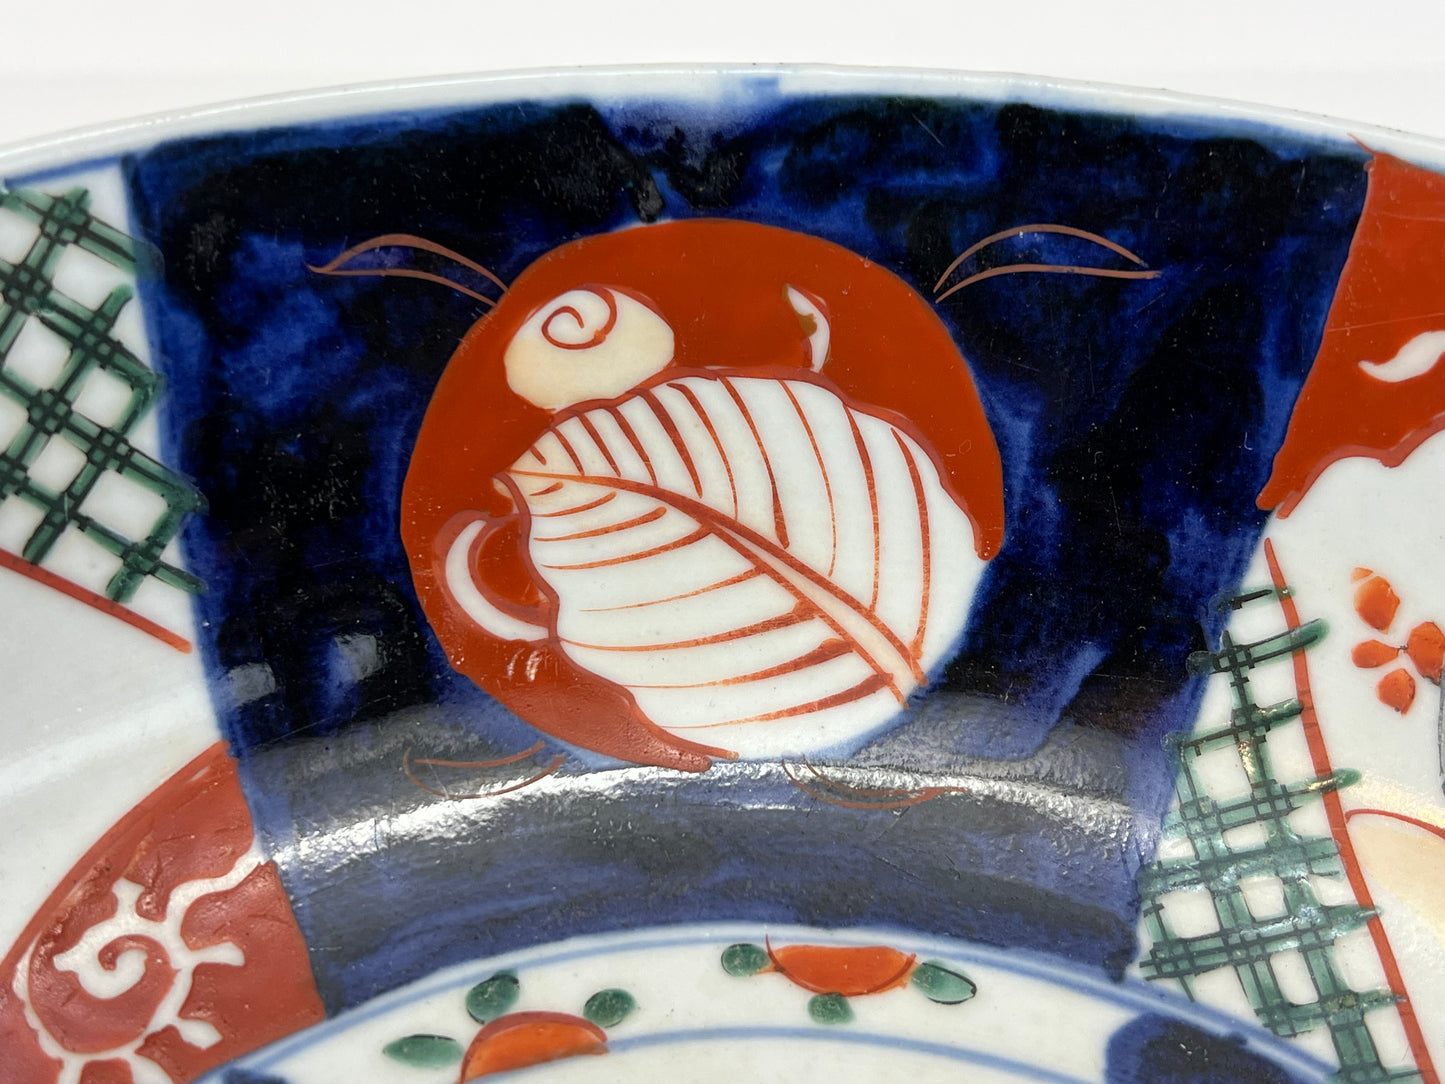 Antique Japanese Meiji Era Late 1800's Imari Ceramic Bowl Floral Motif 9.75"